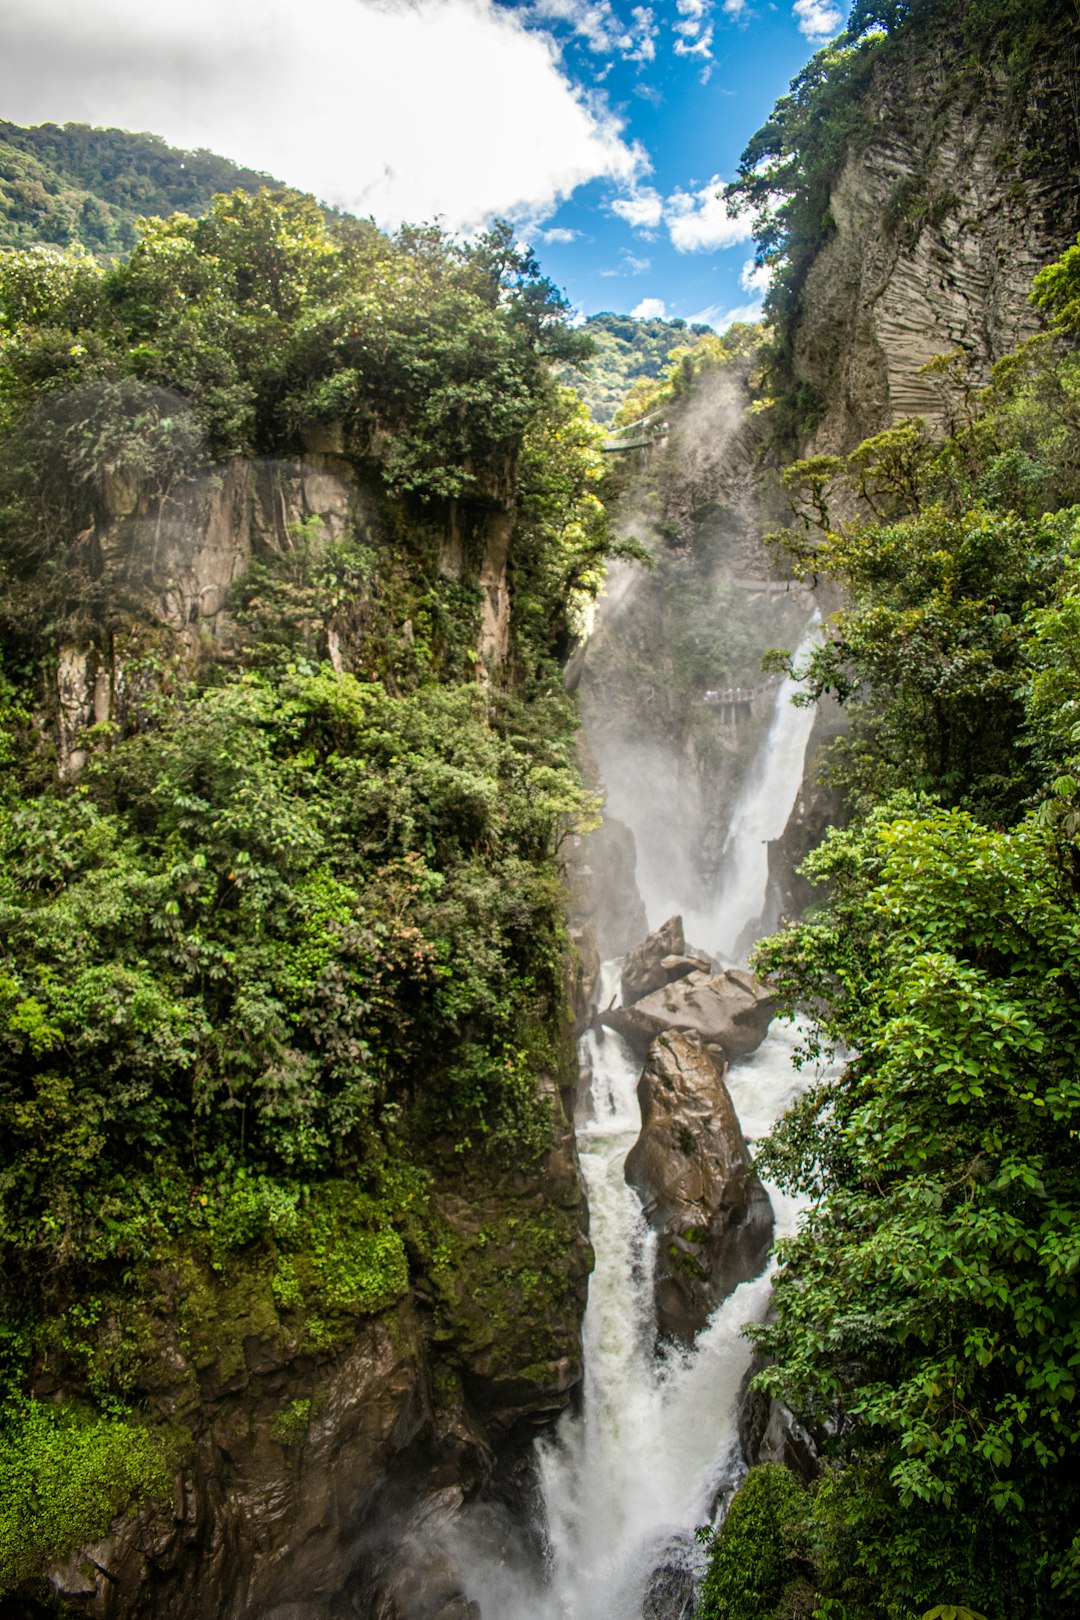 travelers stories about Waterfall in Pailon Del diablo, Ecuador